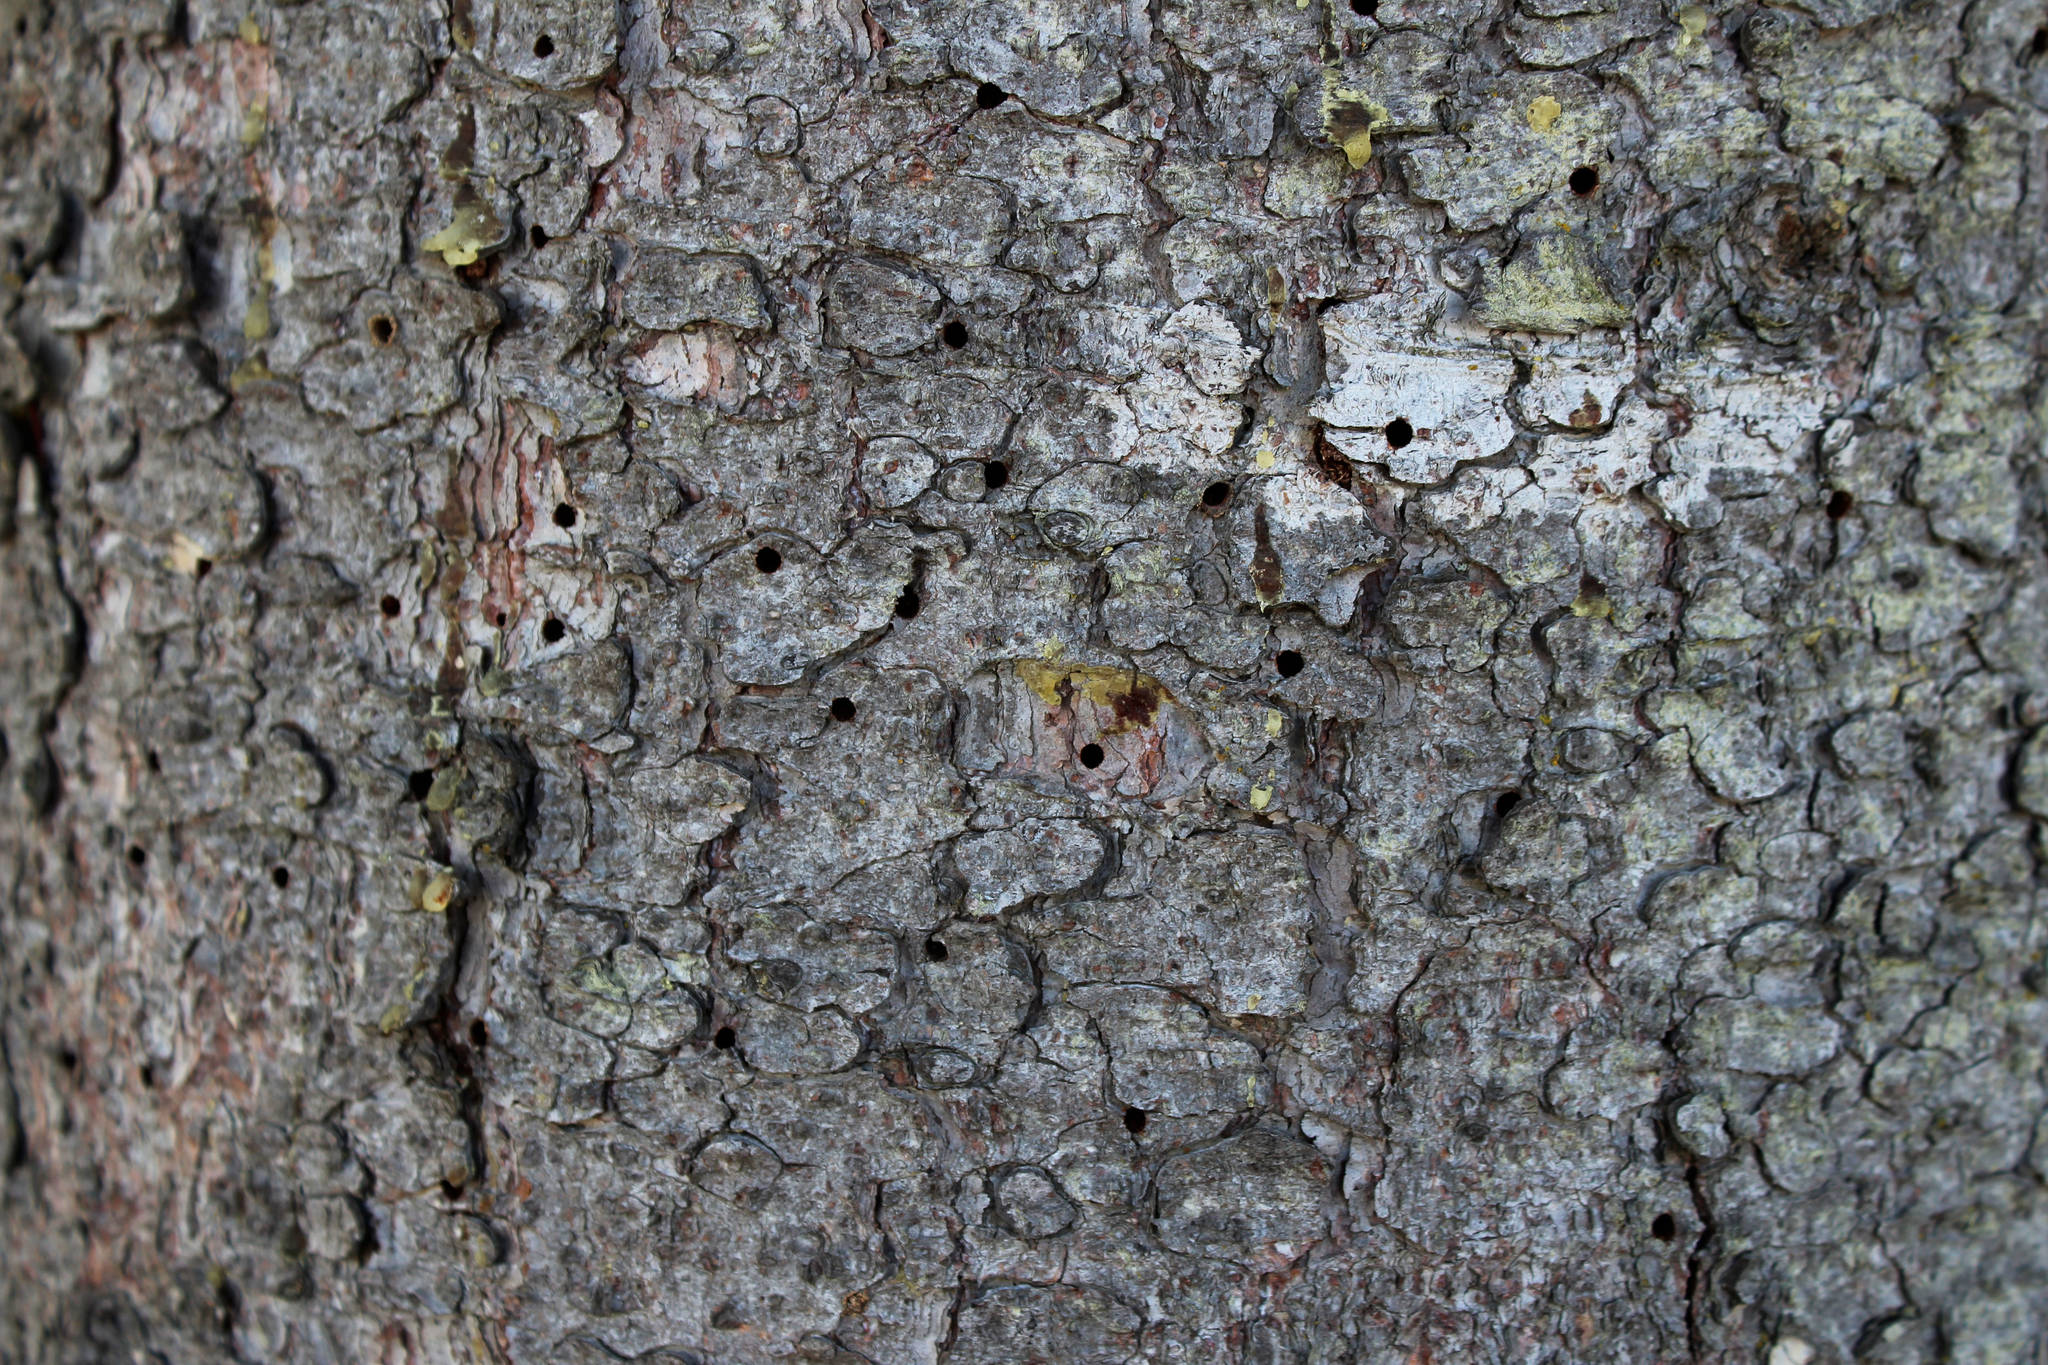 Holes are seen in the bark of a spruce tree outside of the Kenai Post Office on Friday, July 2, 2021 in Kenai, Alaska. (Ashlyn O’Hara/Peninsula Clarion)